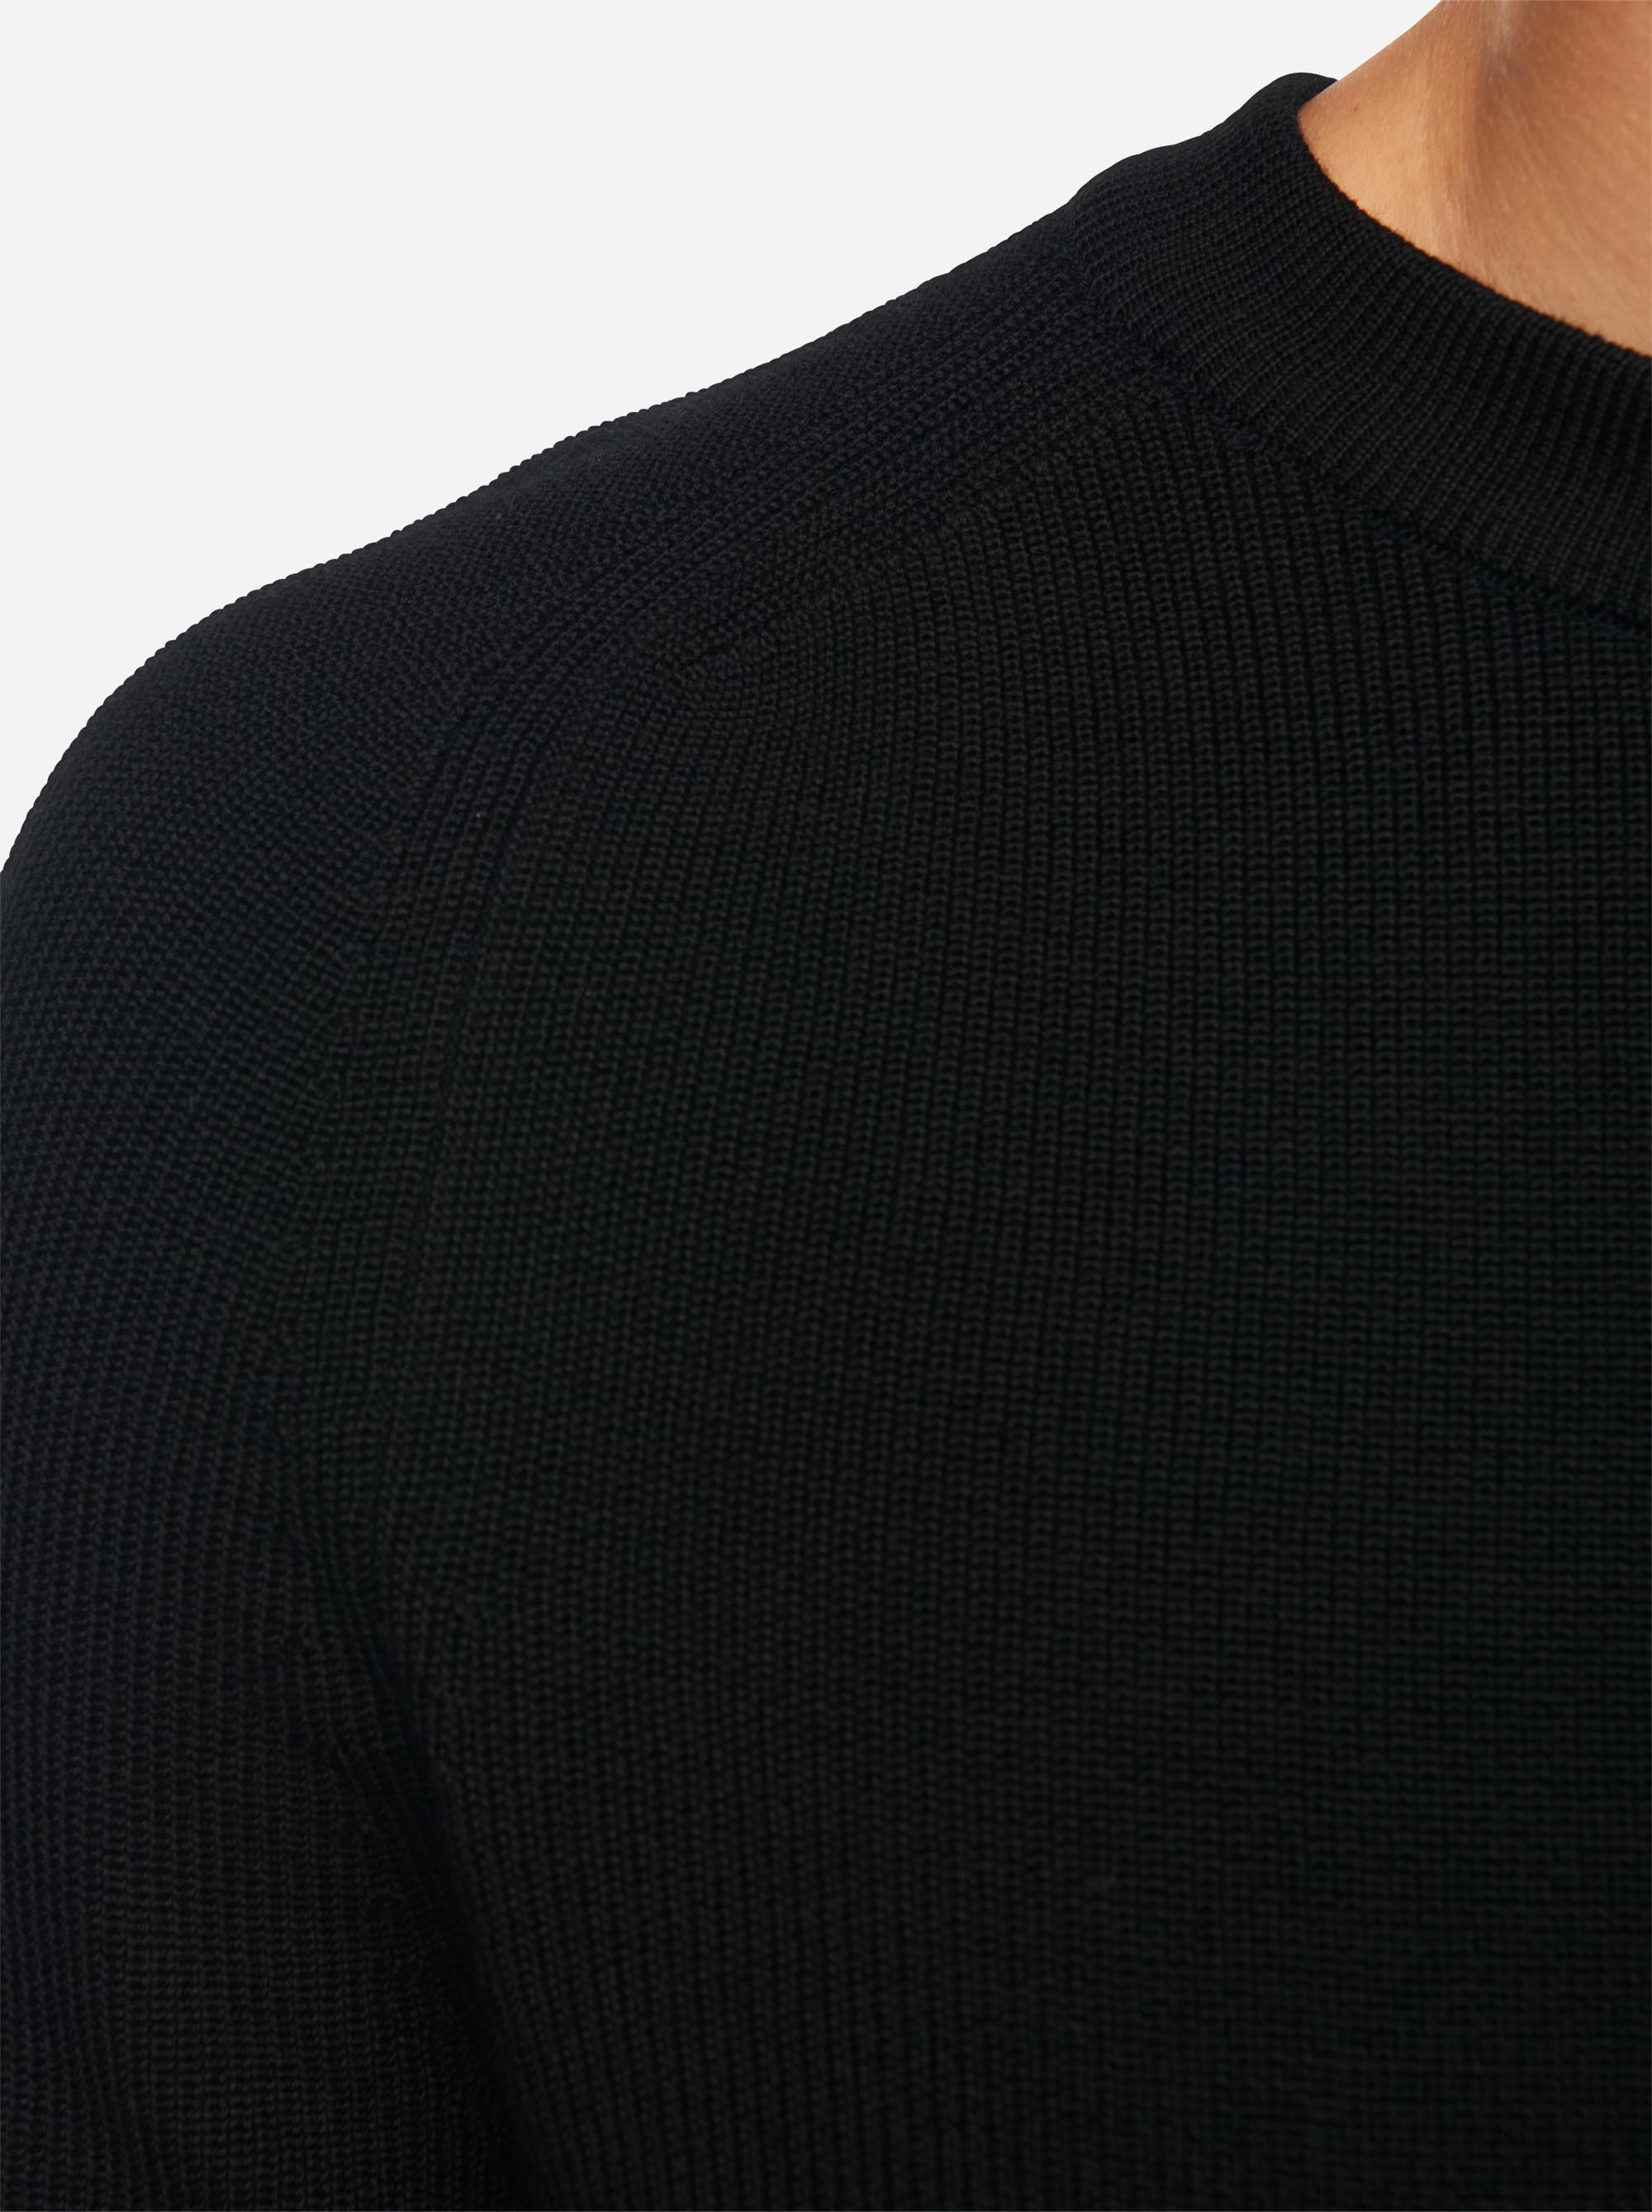 Teym - Crewneck - The Merino Sweater - Men - Black - 4